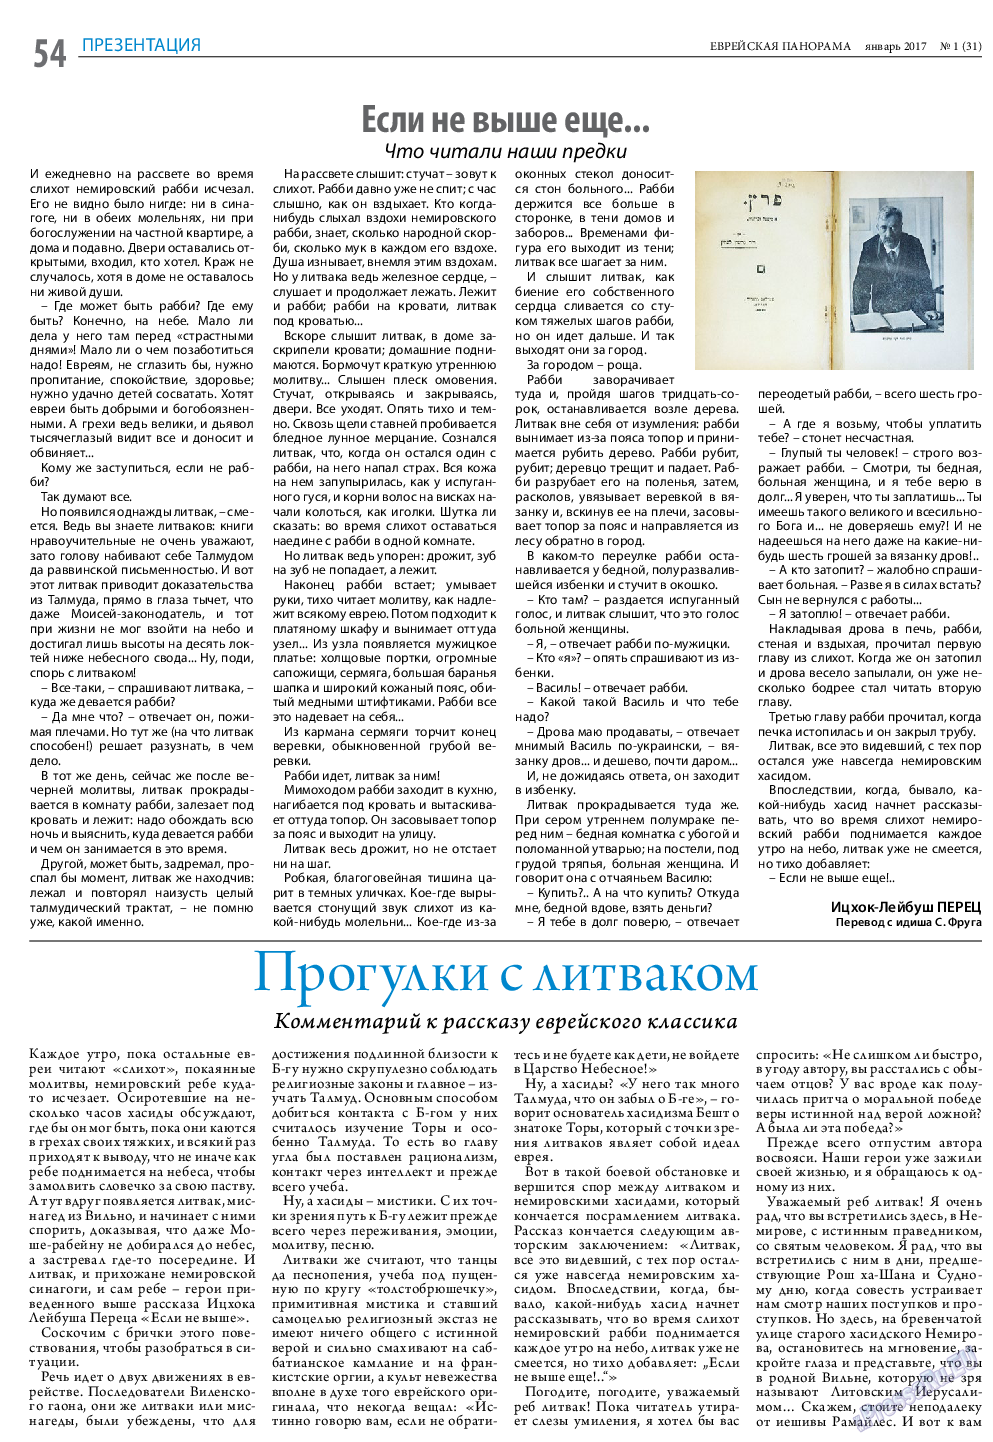 Еврейская панорама, газета. 2017 №1 стр.54